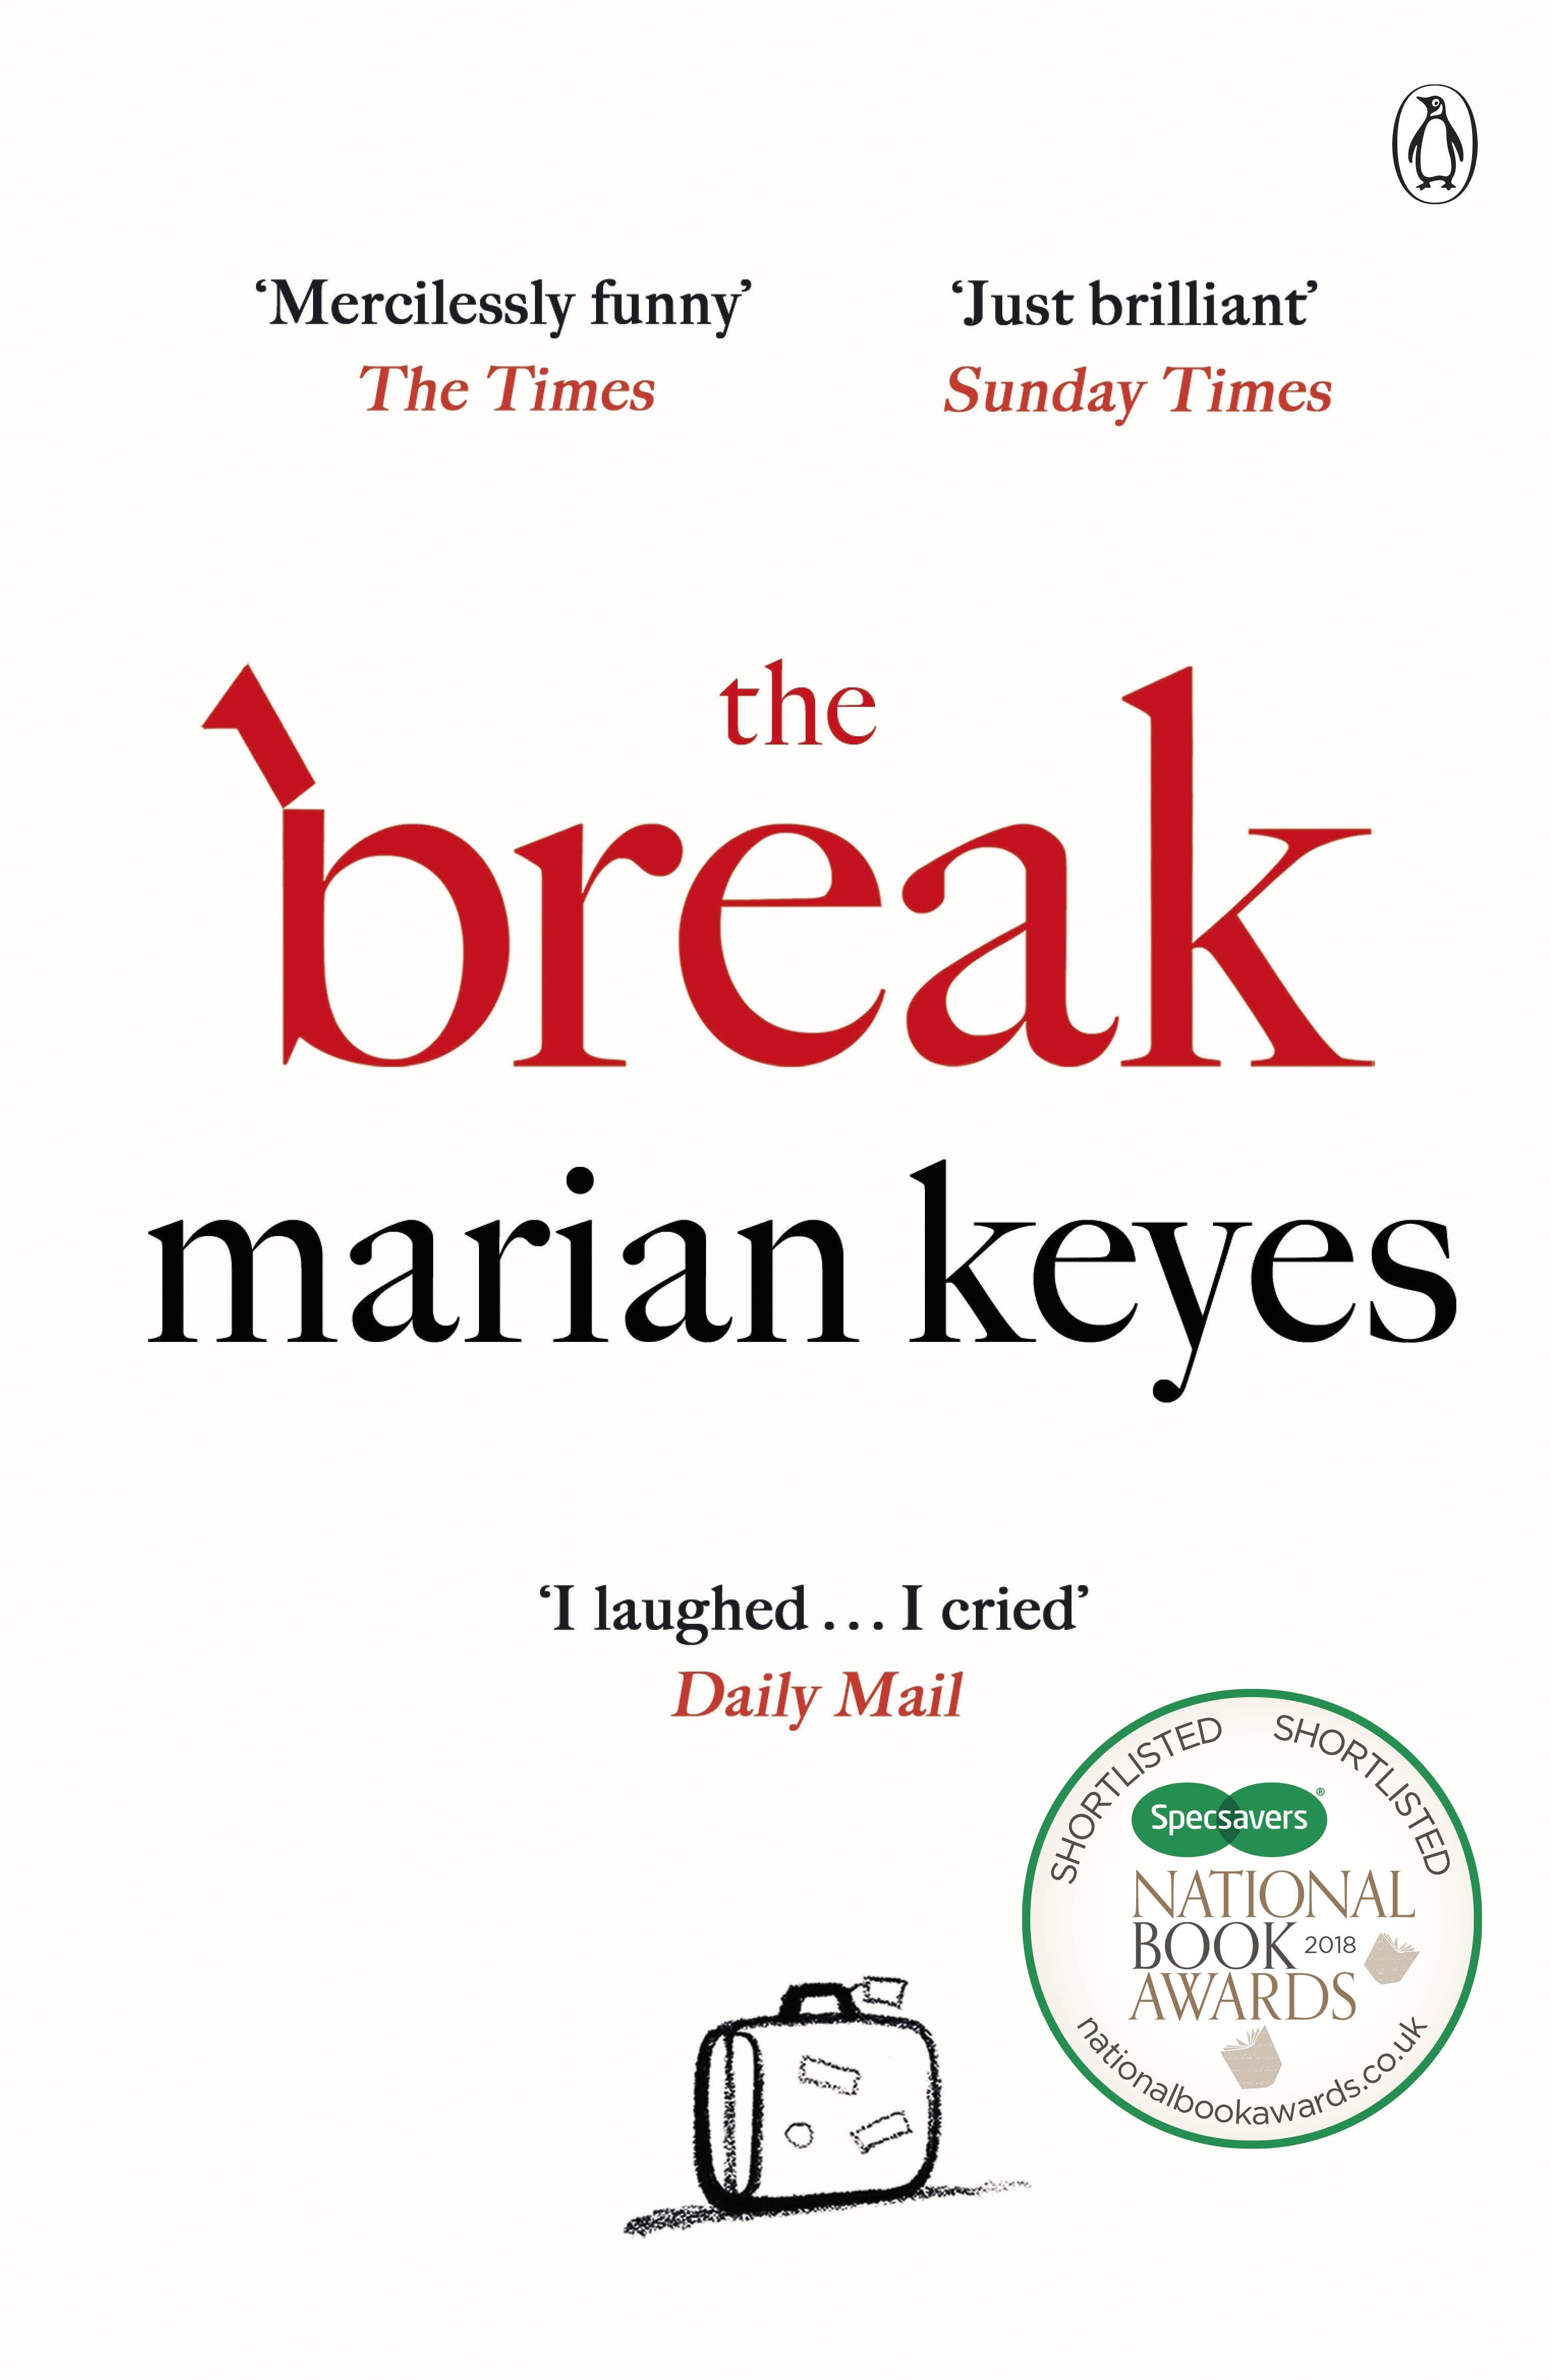 Book “The Break” by Marian Keyes — May 31, 2018